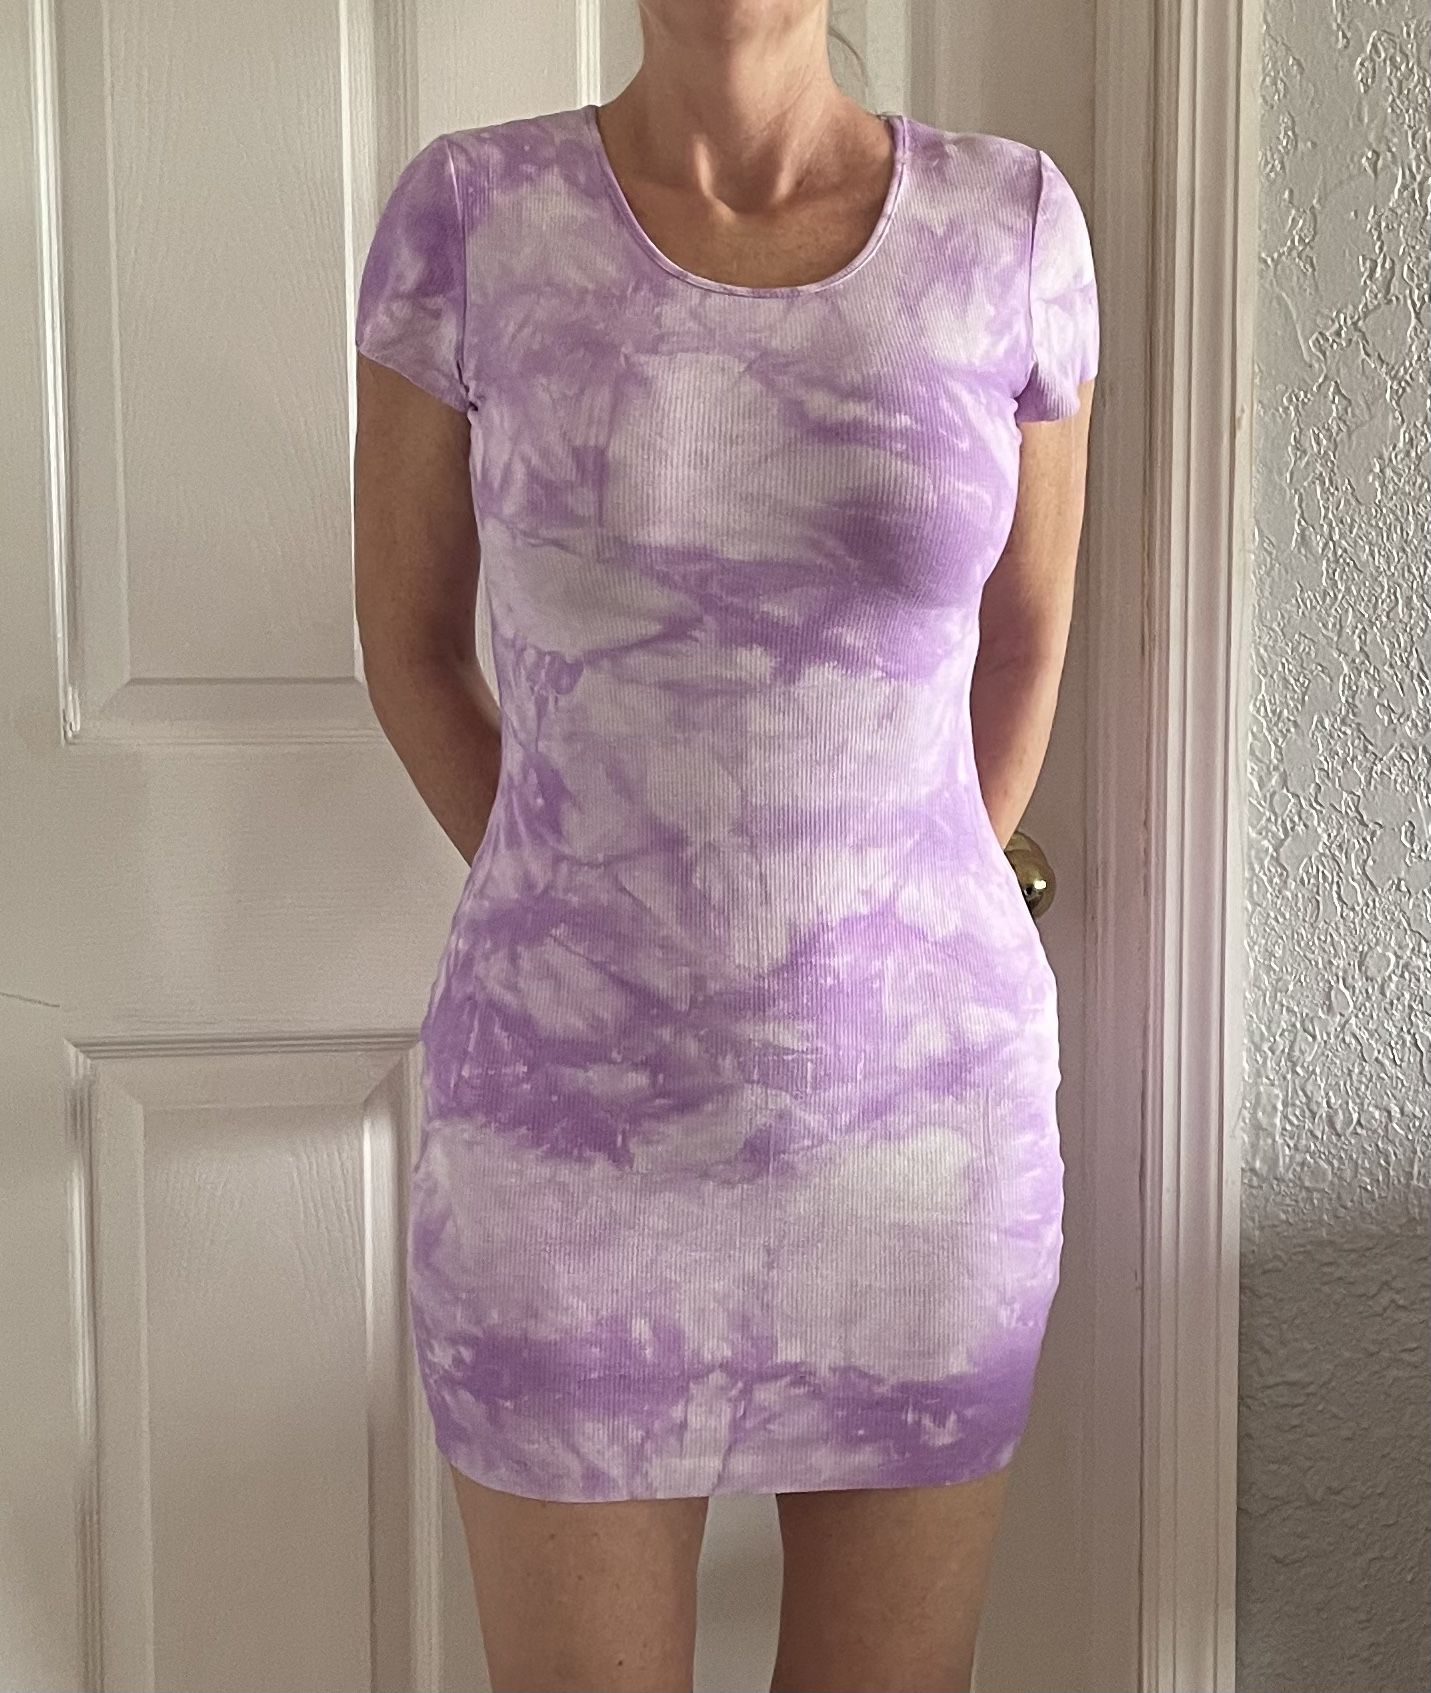 Purple & White Dress